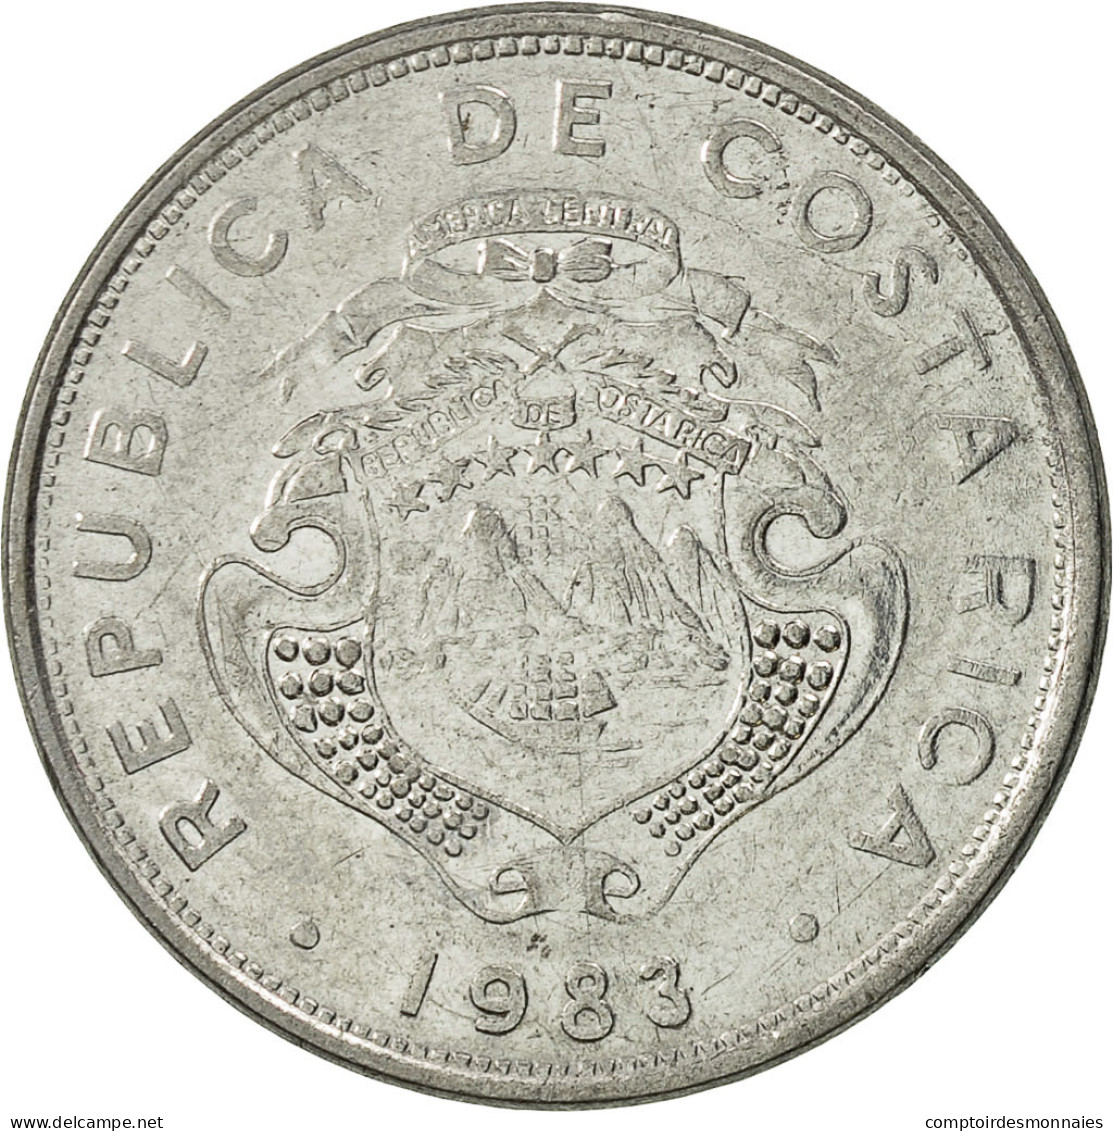 Monnaie, Costa Rica, Colon, 1983, TTB+, Stainless Steel, KM:210.1 - Costa Rica